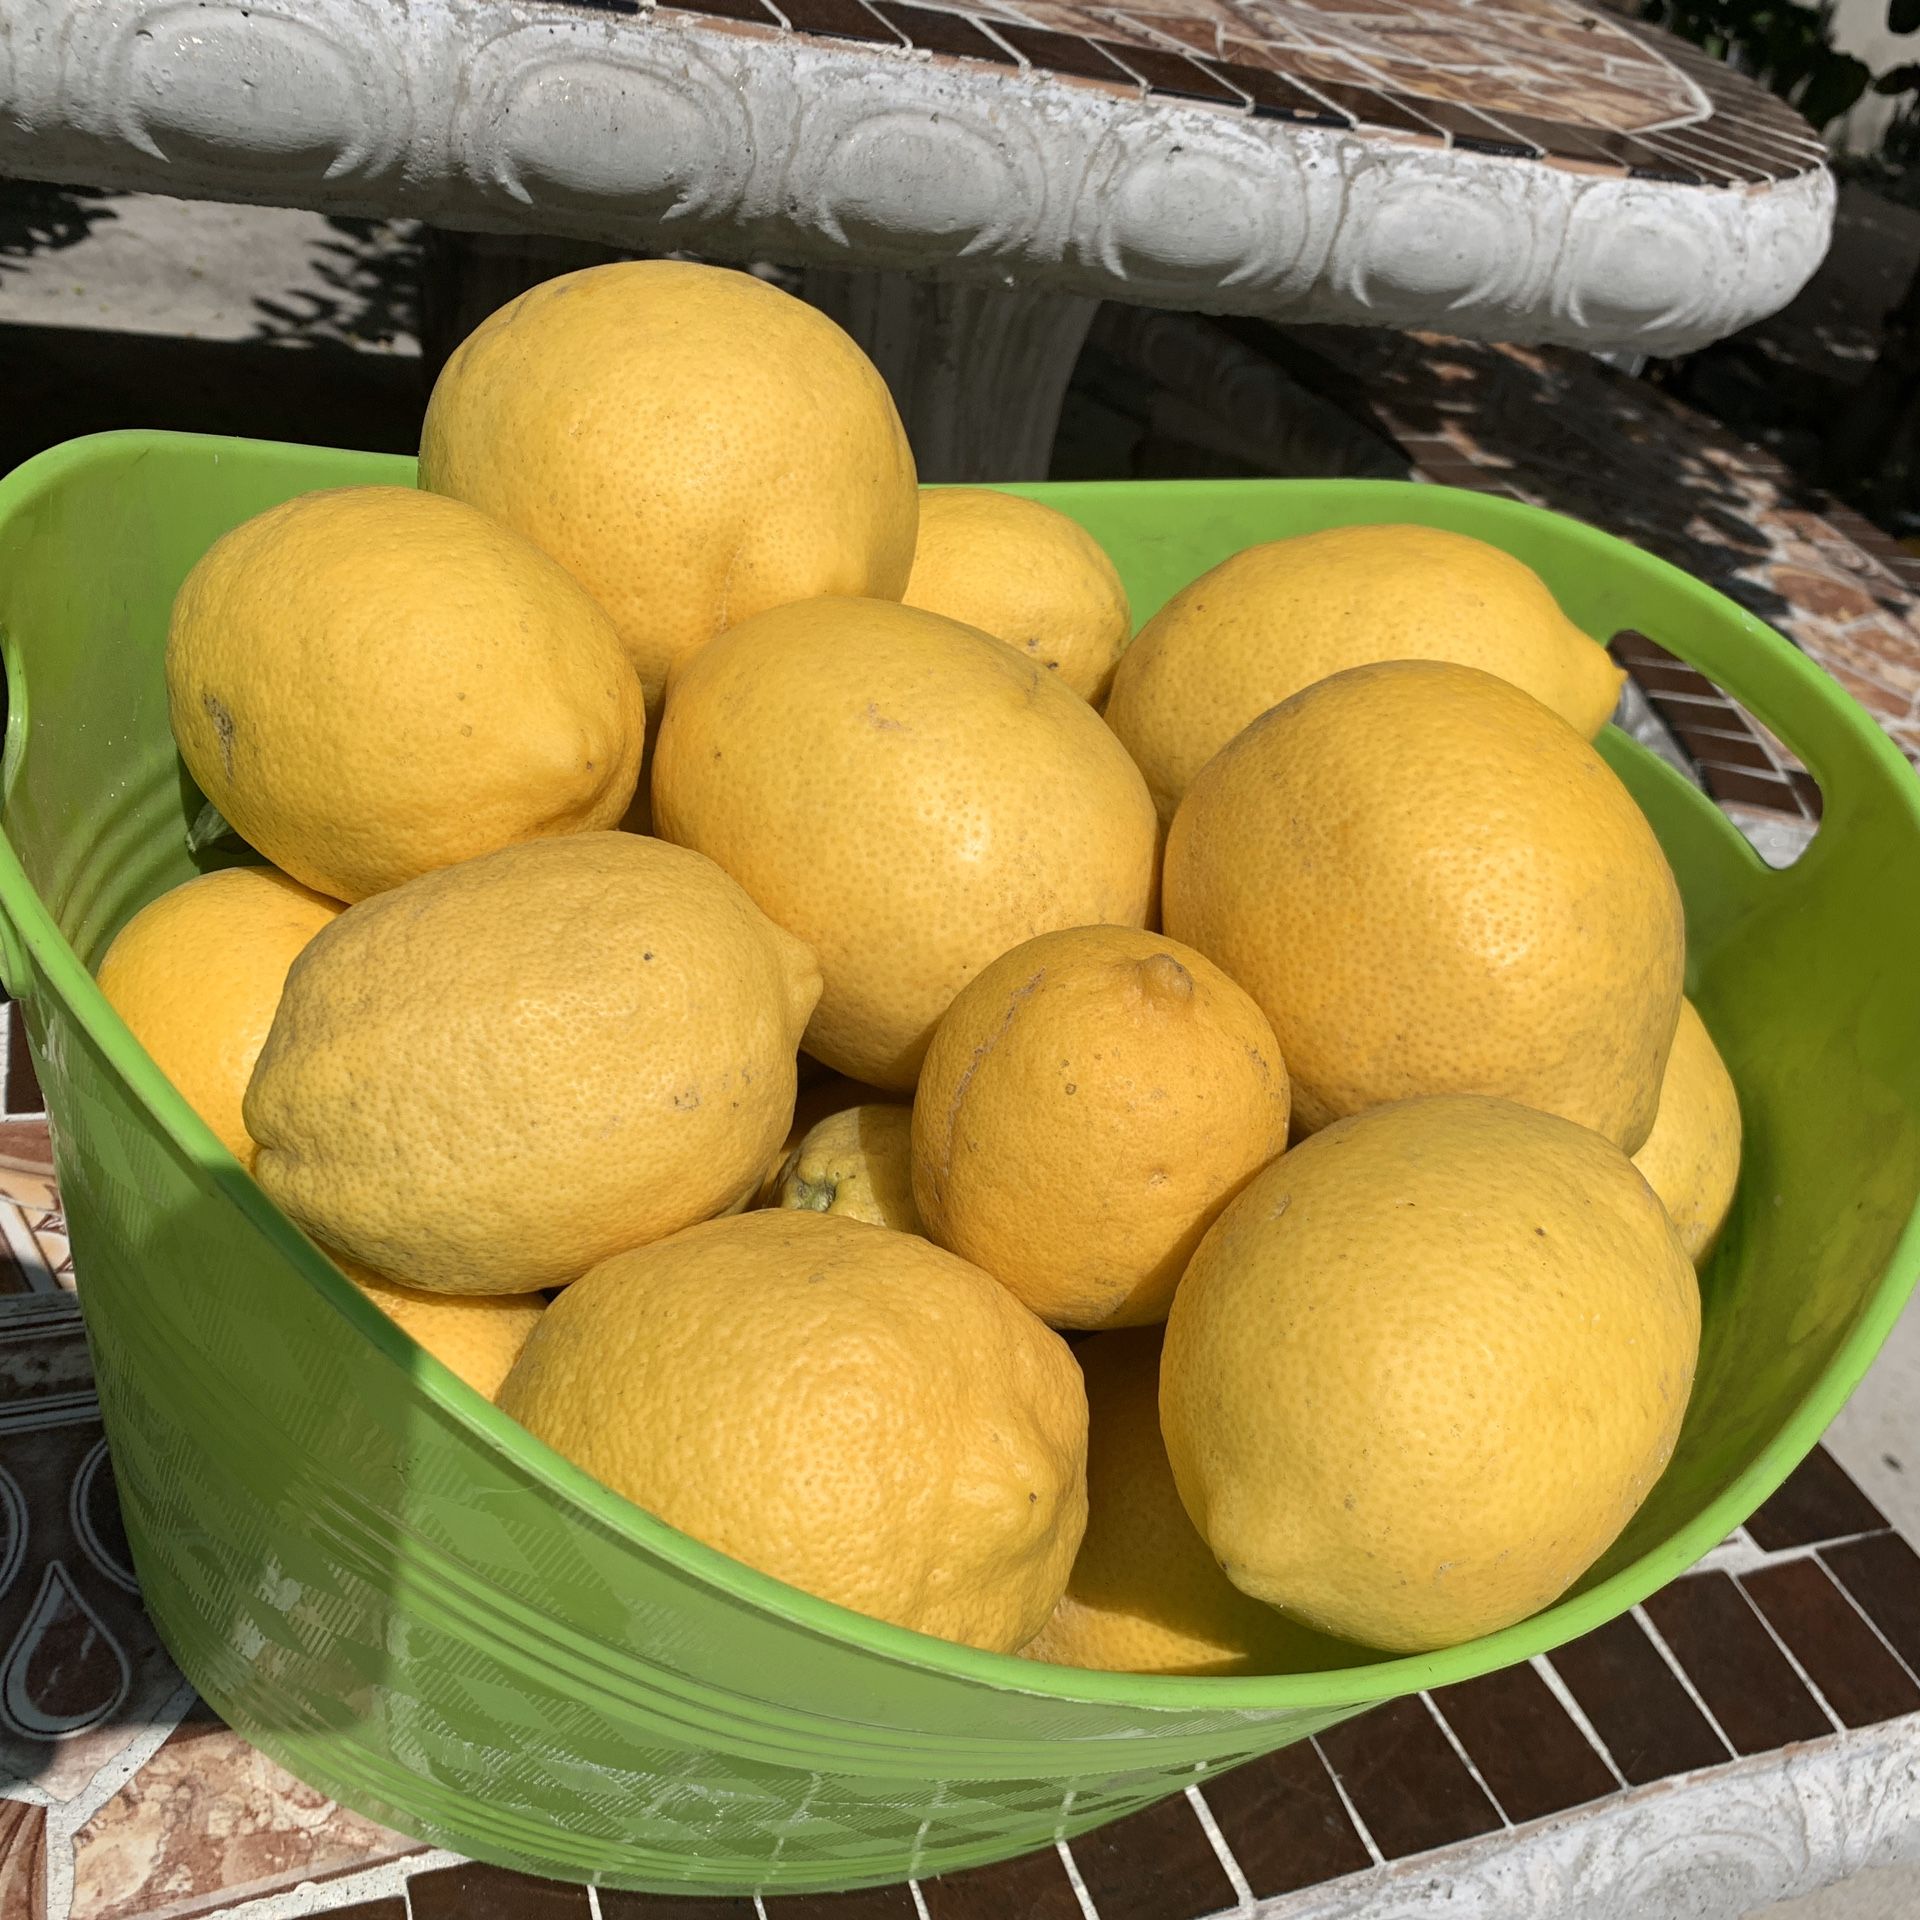 Buckets of Lemons